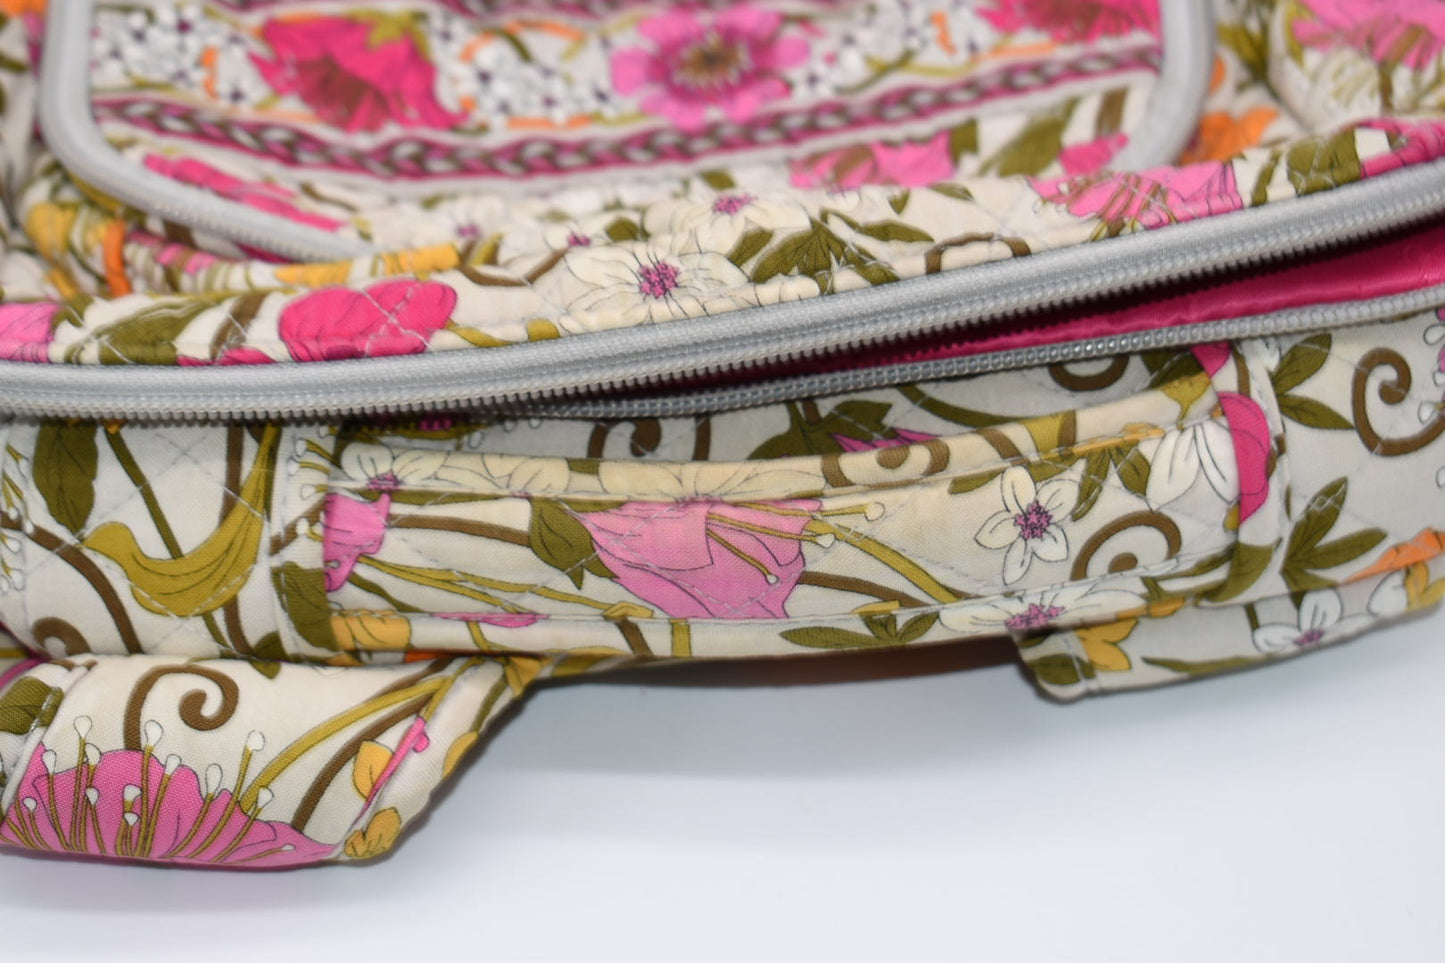 Vera Bradley Laptop Campus Backpack in "Tea Garden" Pattern